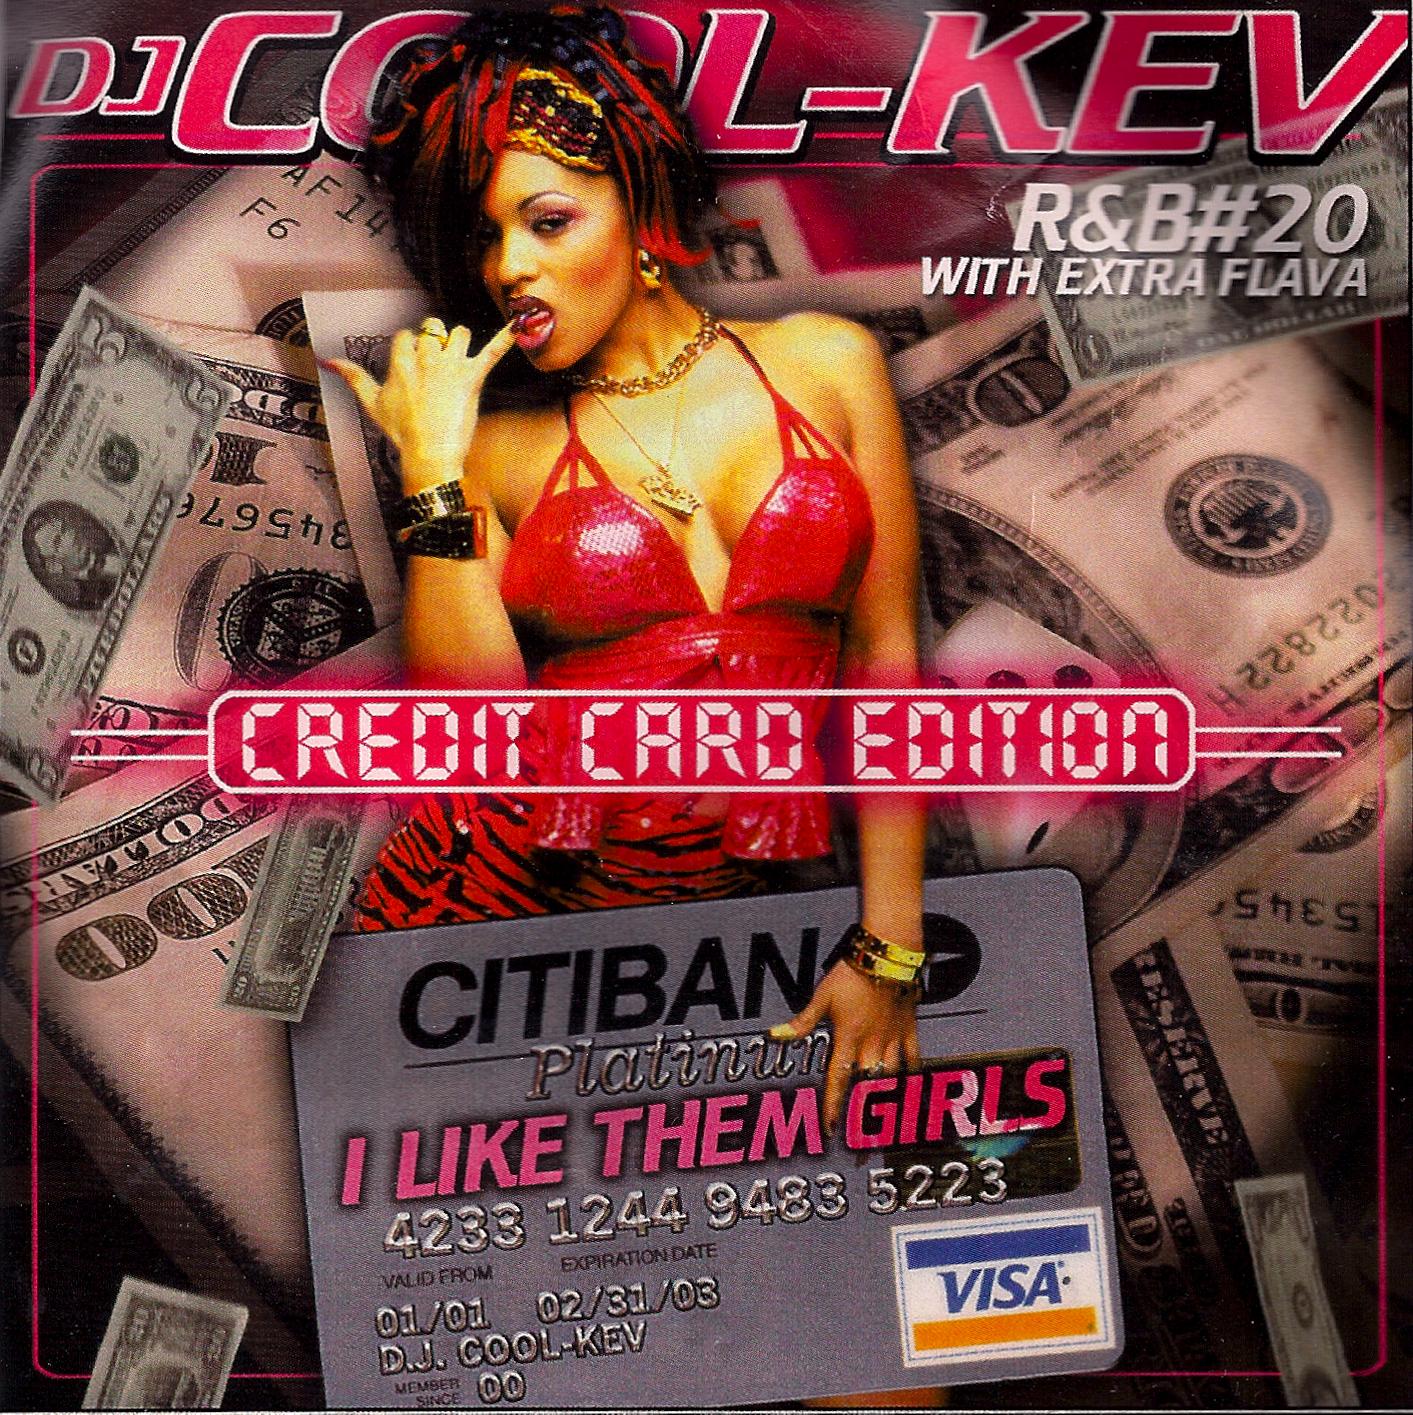 DJ Cool Kev – R&B 20, R&B, RNB, Throwback R&B, Mixtape Downloads, Downloads